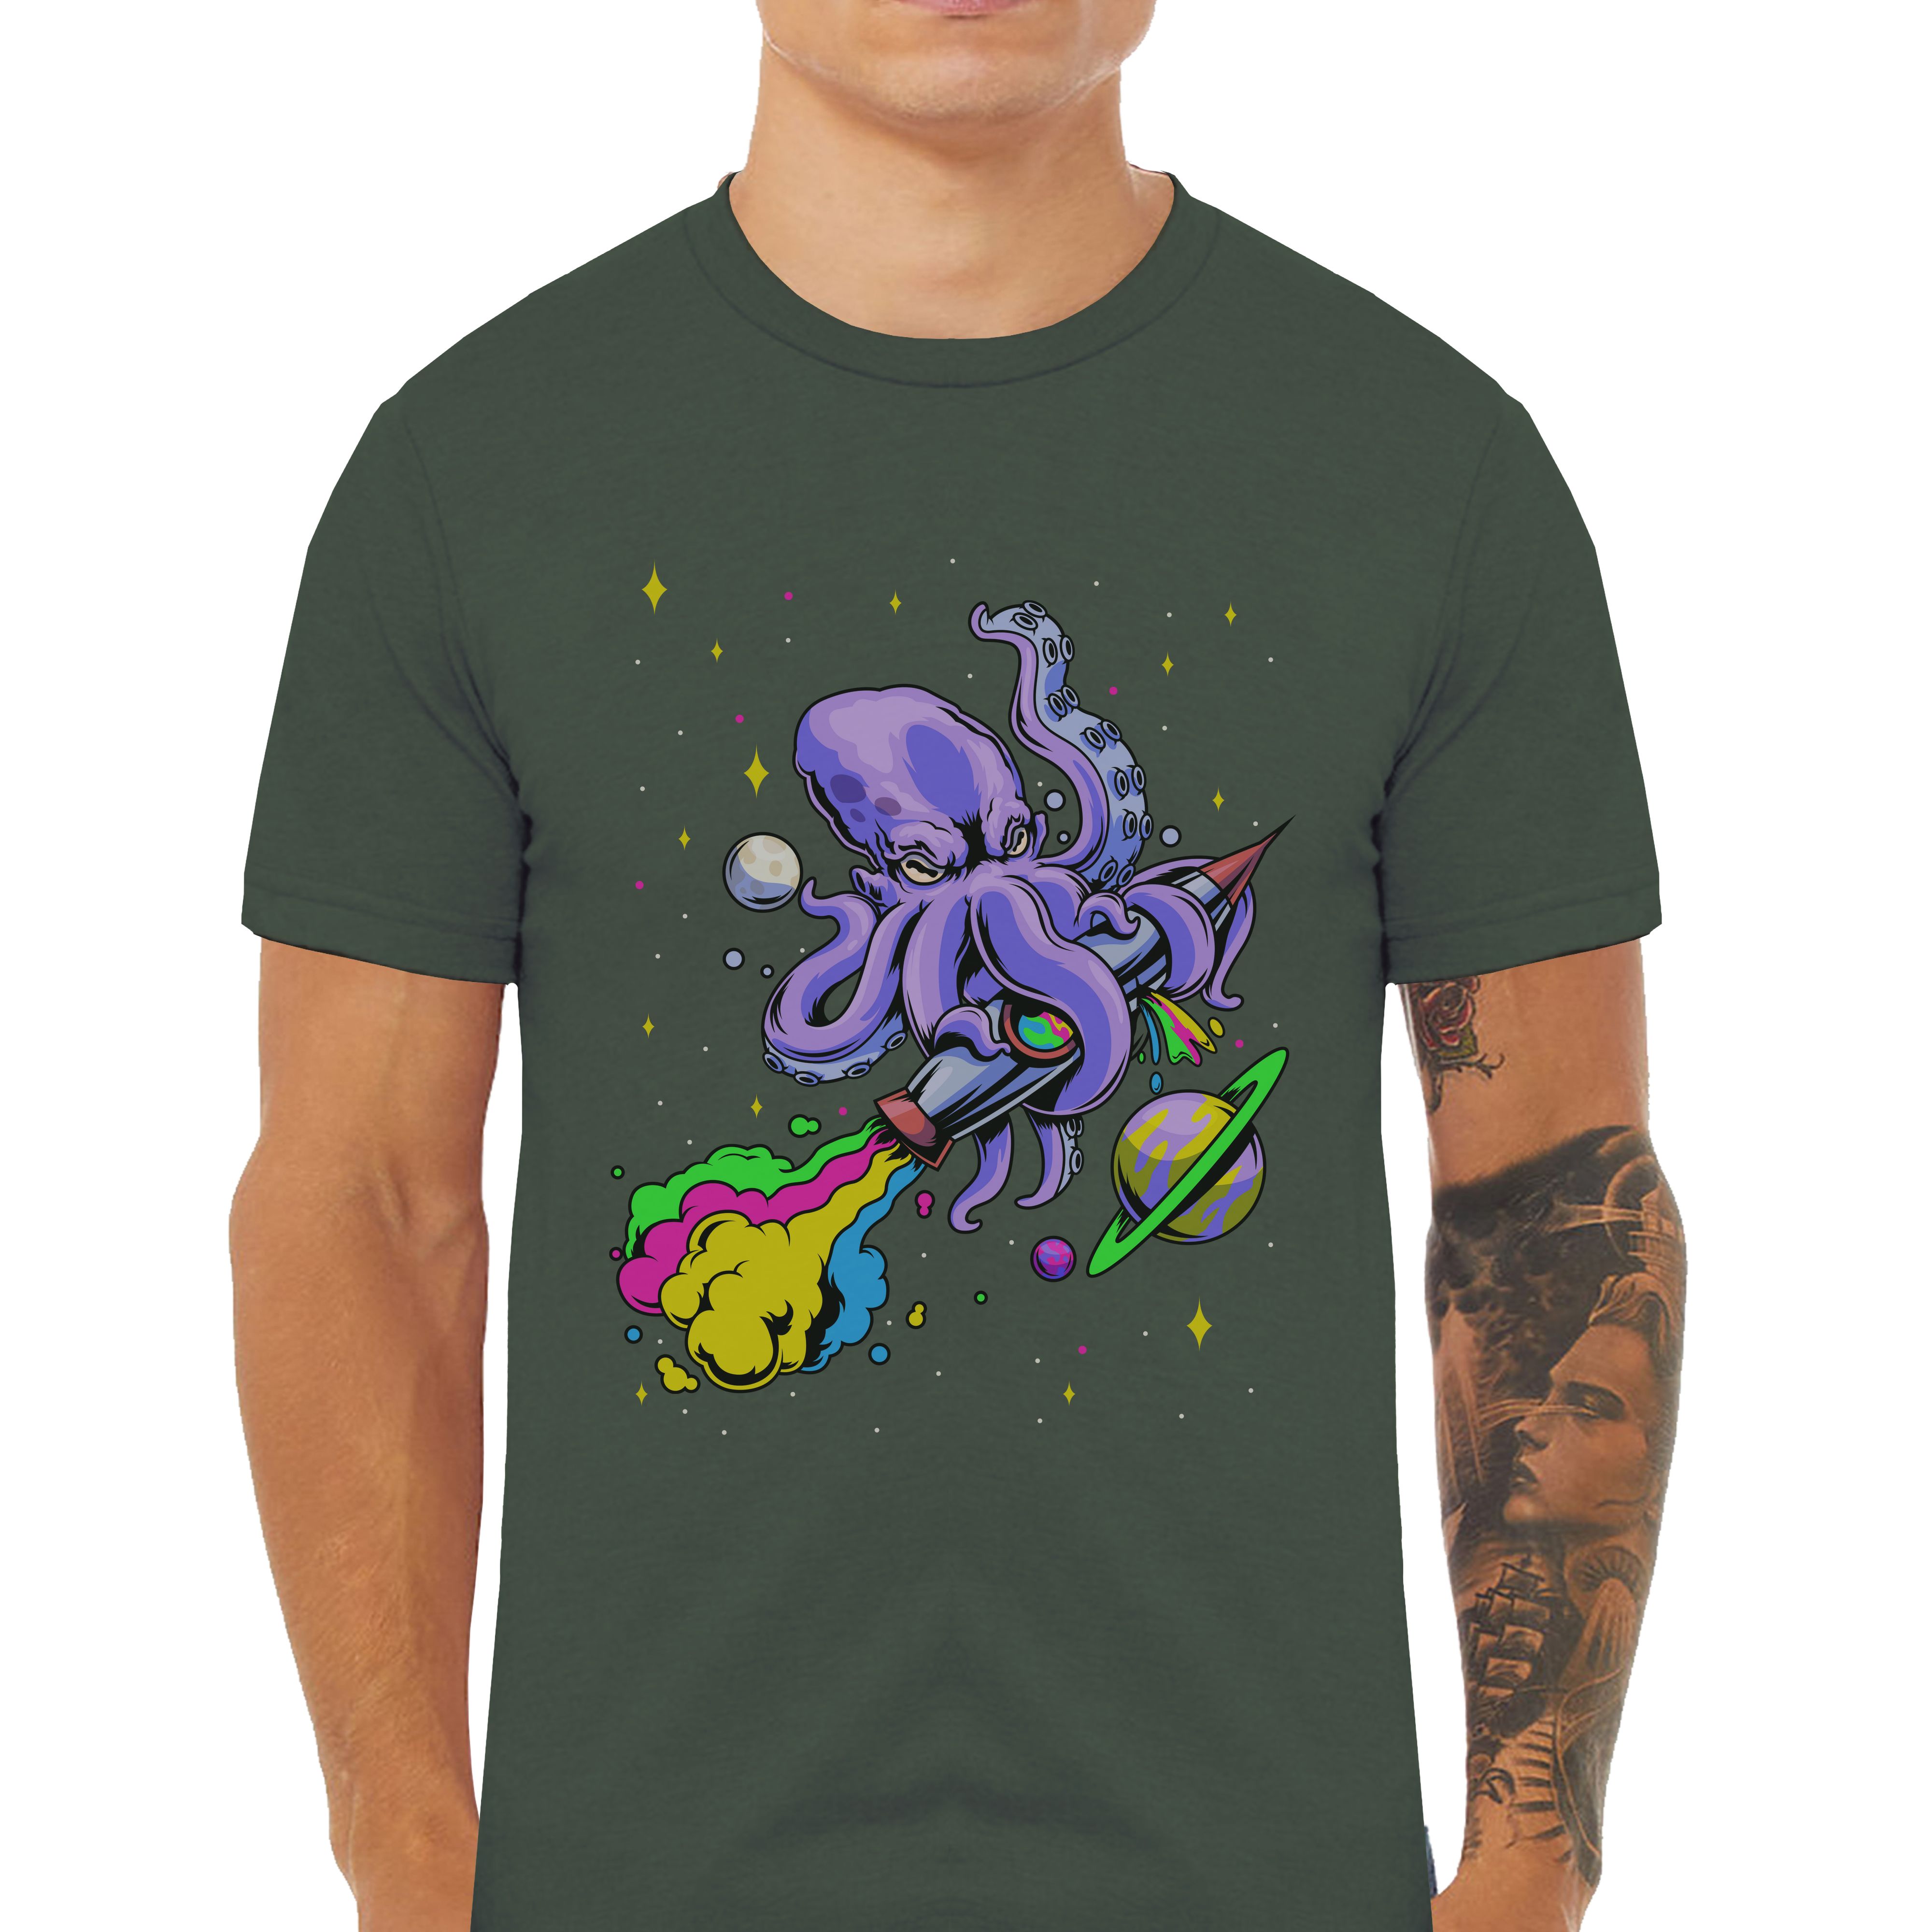 Octospace Classic Graphic T-Shirt - Cuztom Threadz